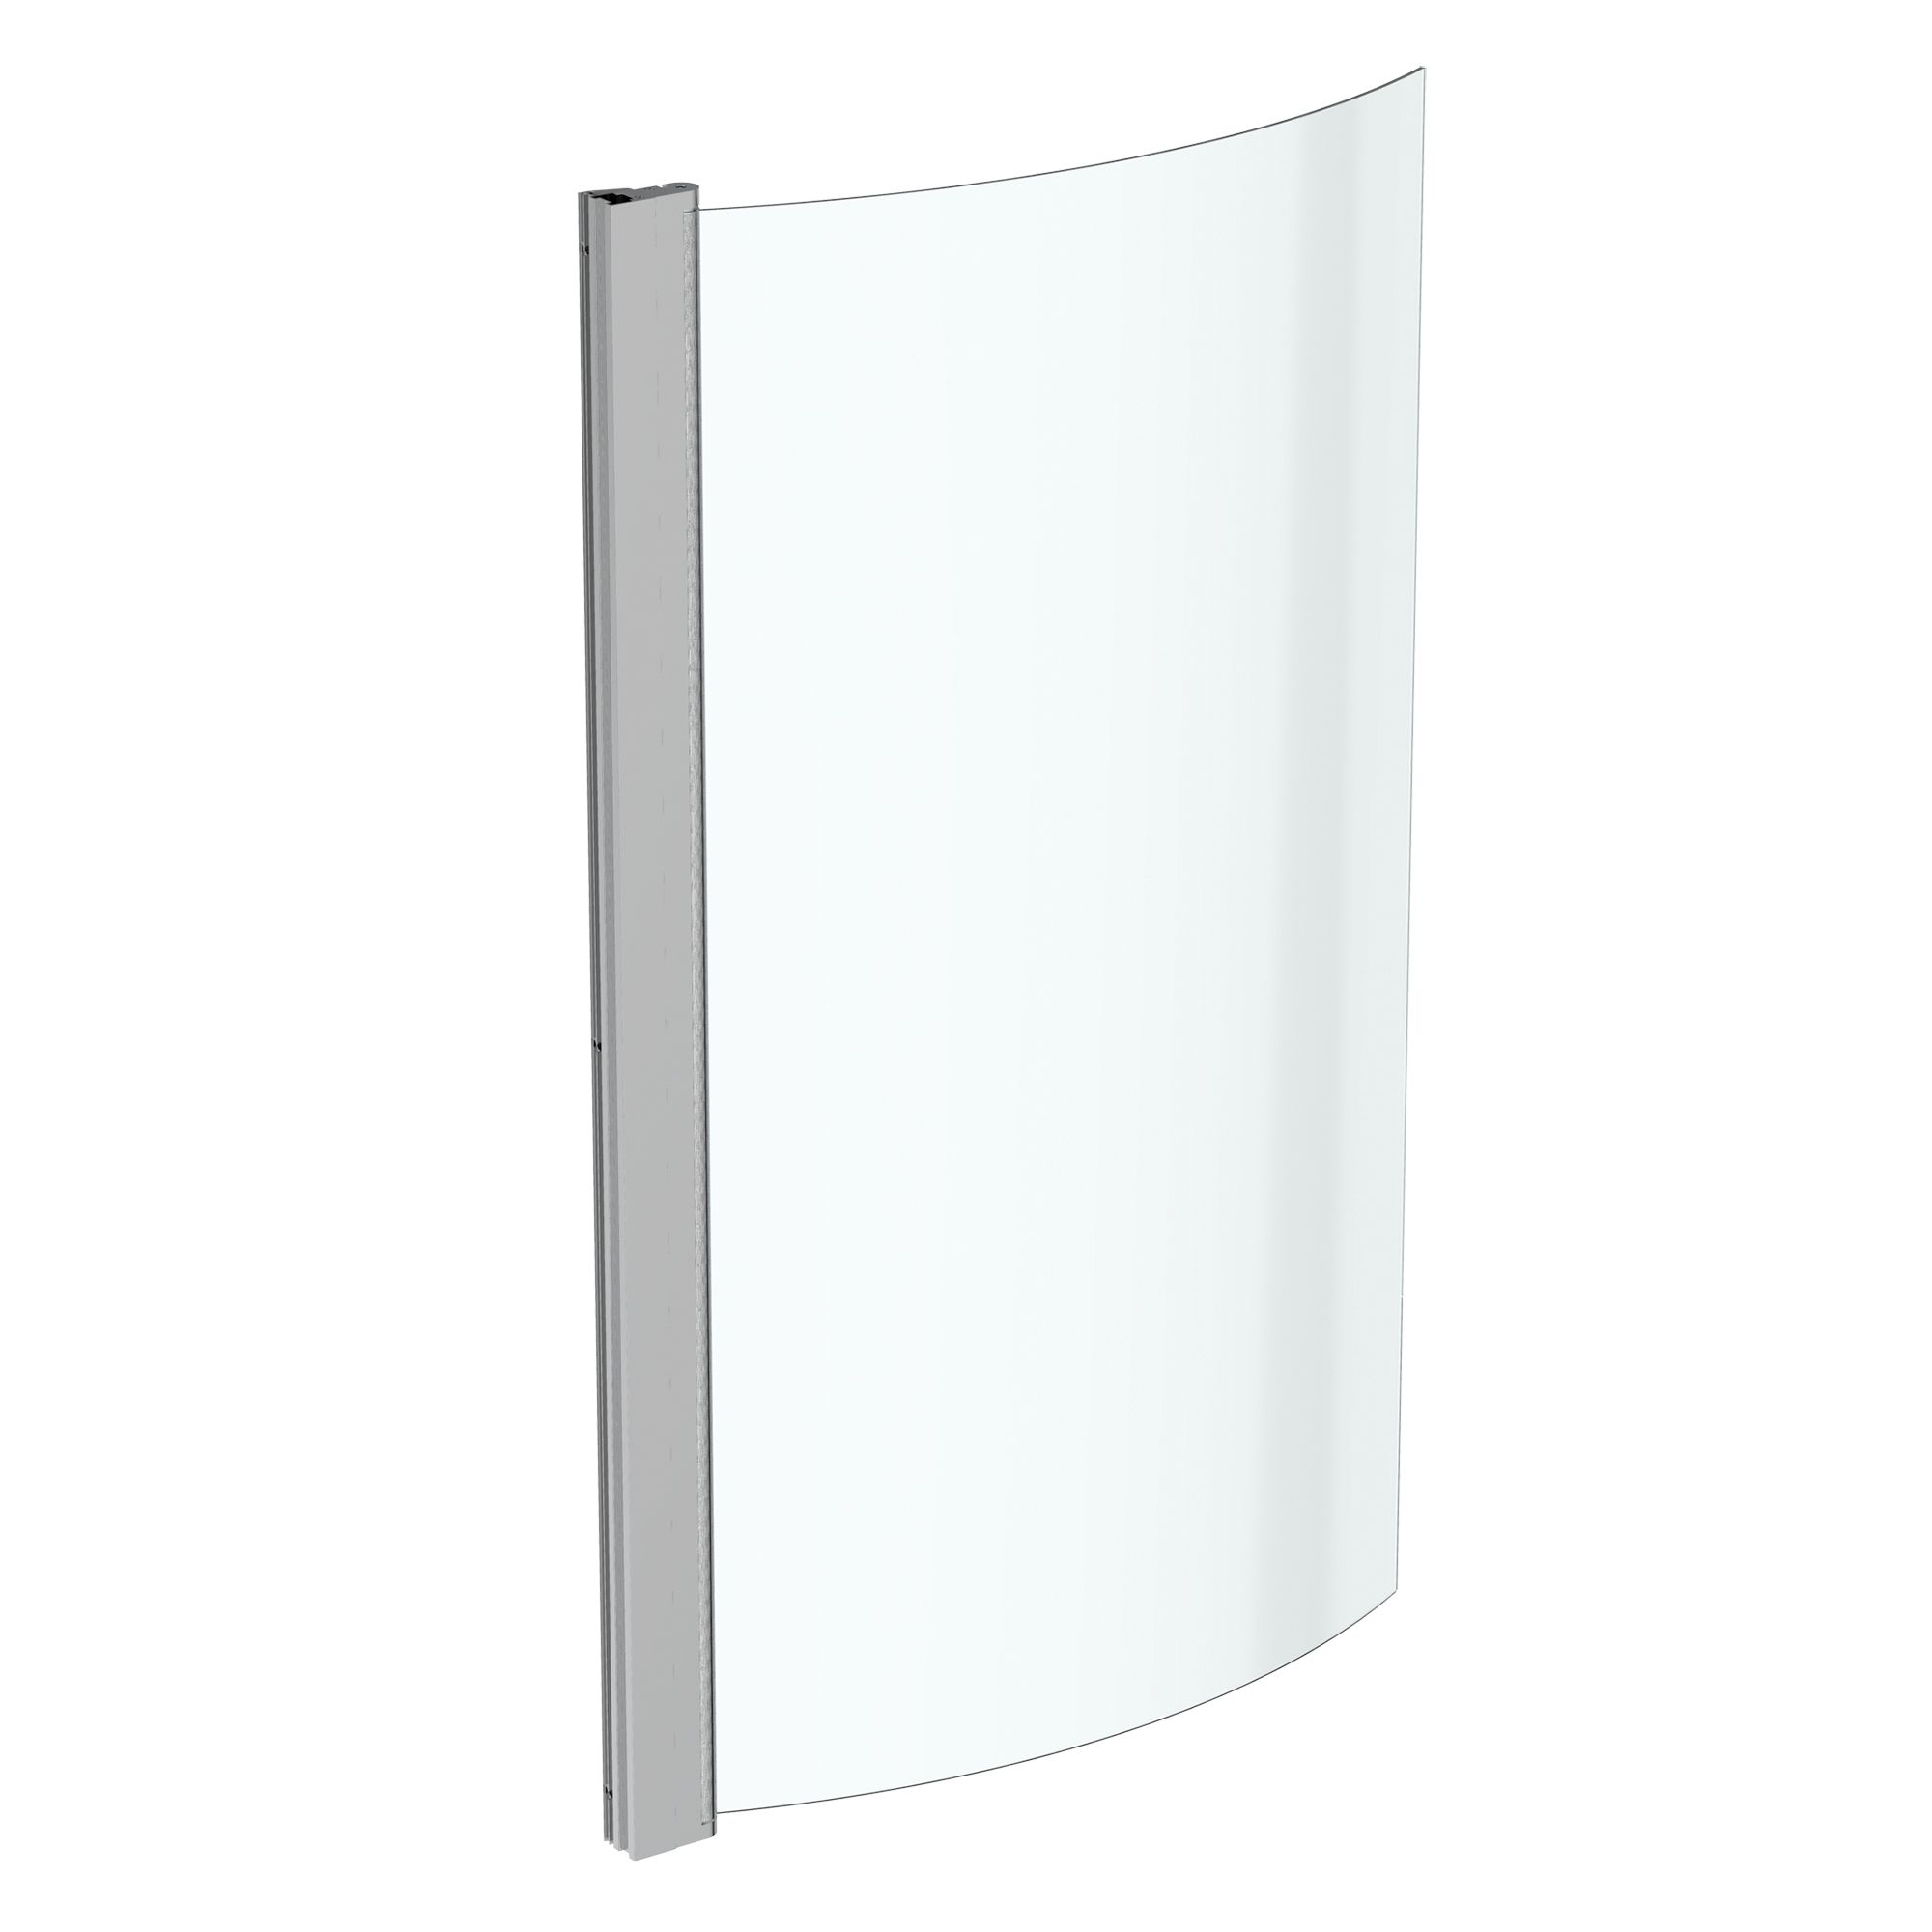 Ideal Standard Tempo Arc White P-shaped Left-handed Shower Bath, panel & screen set